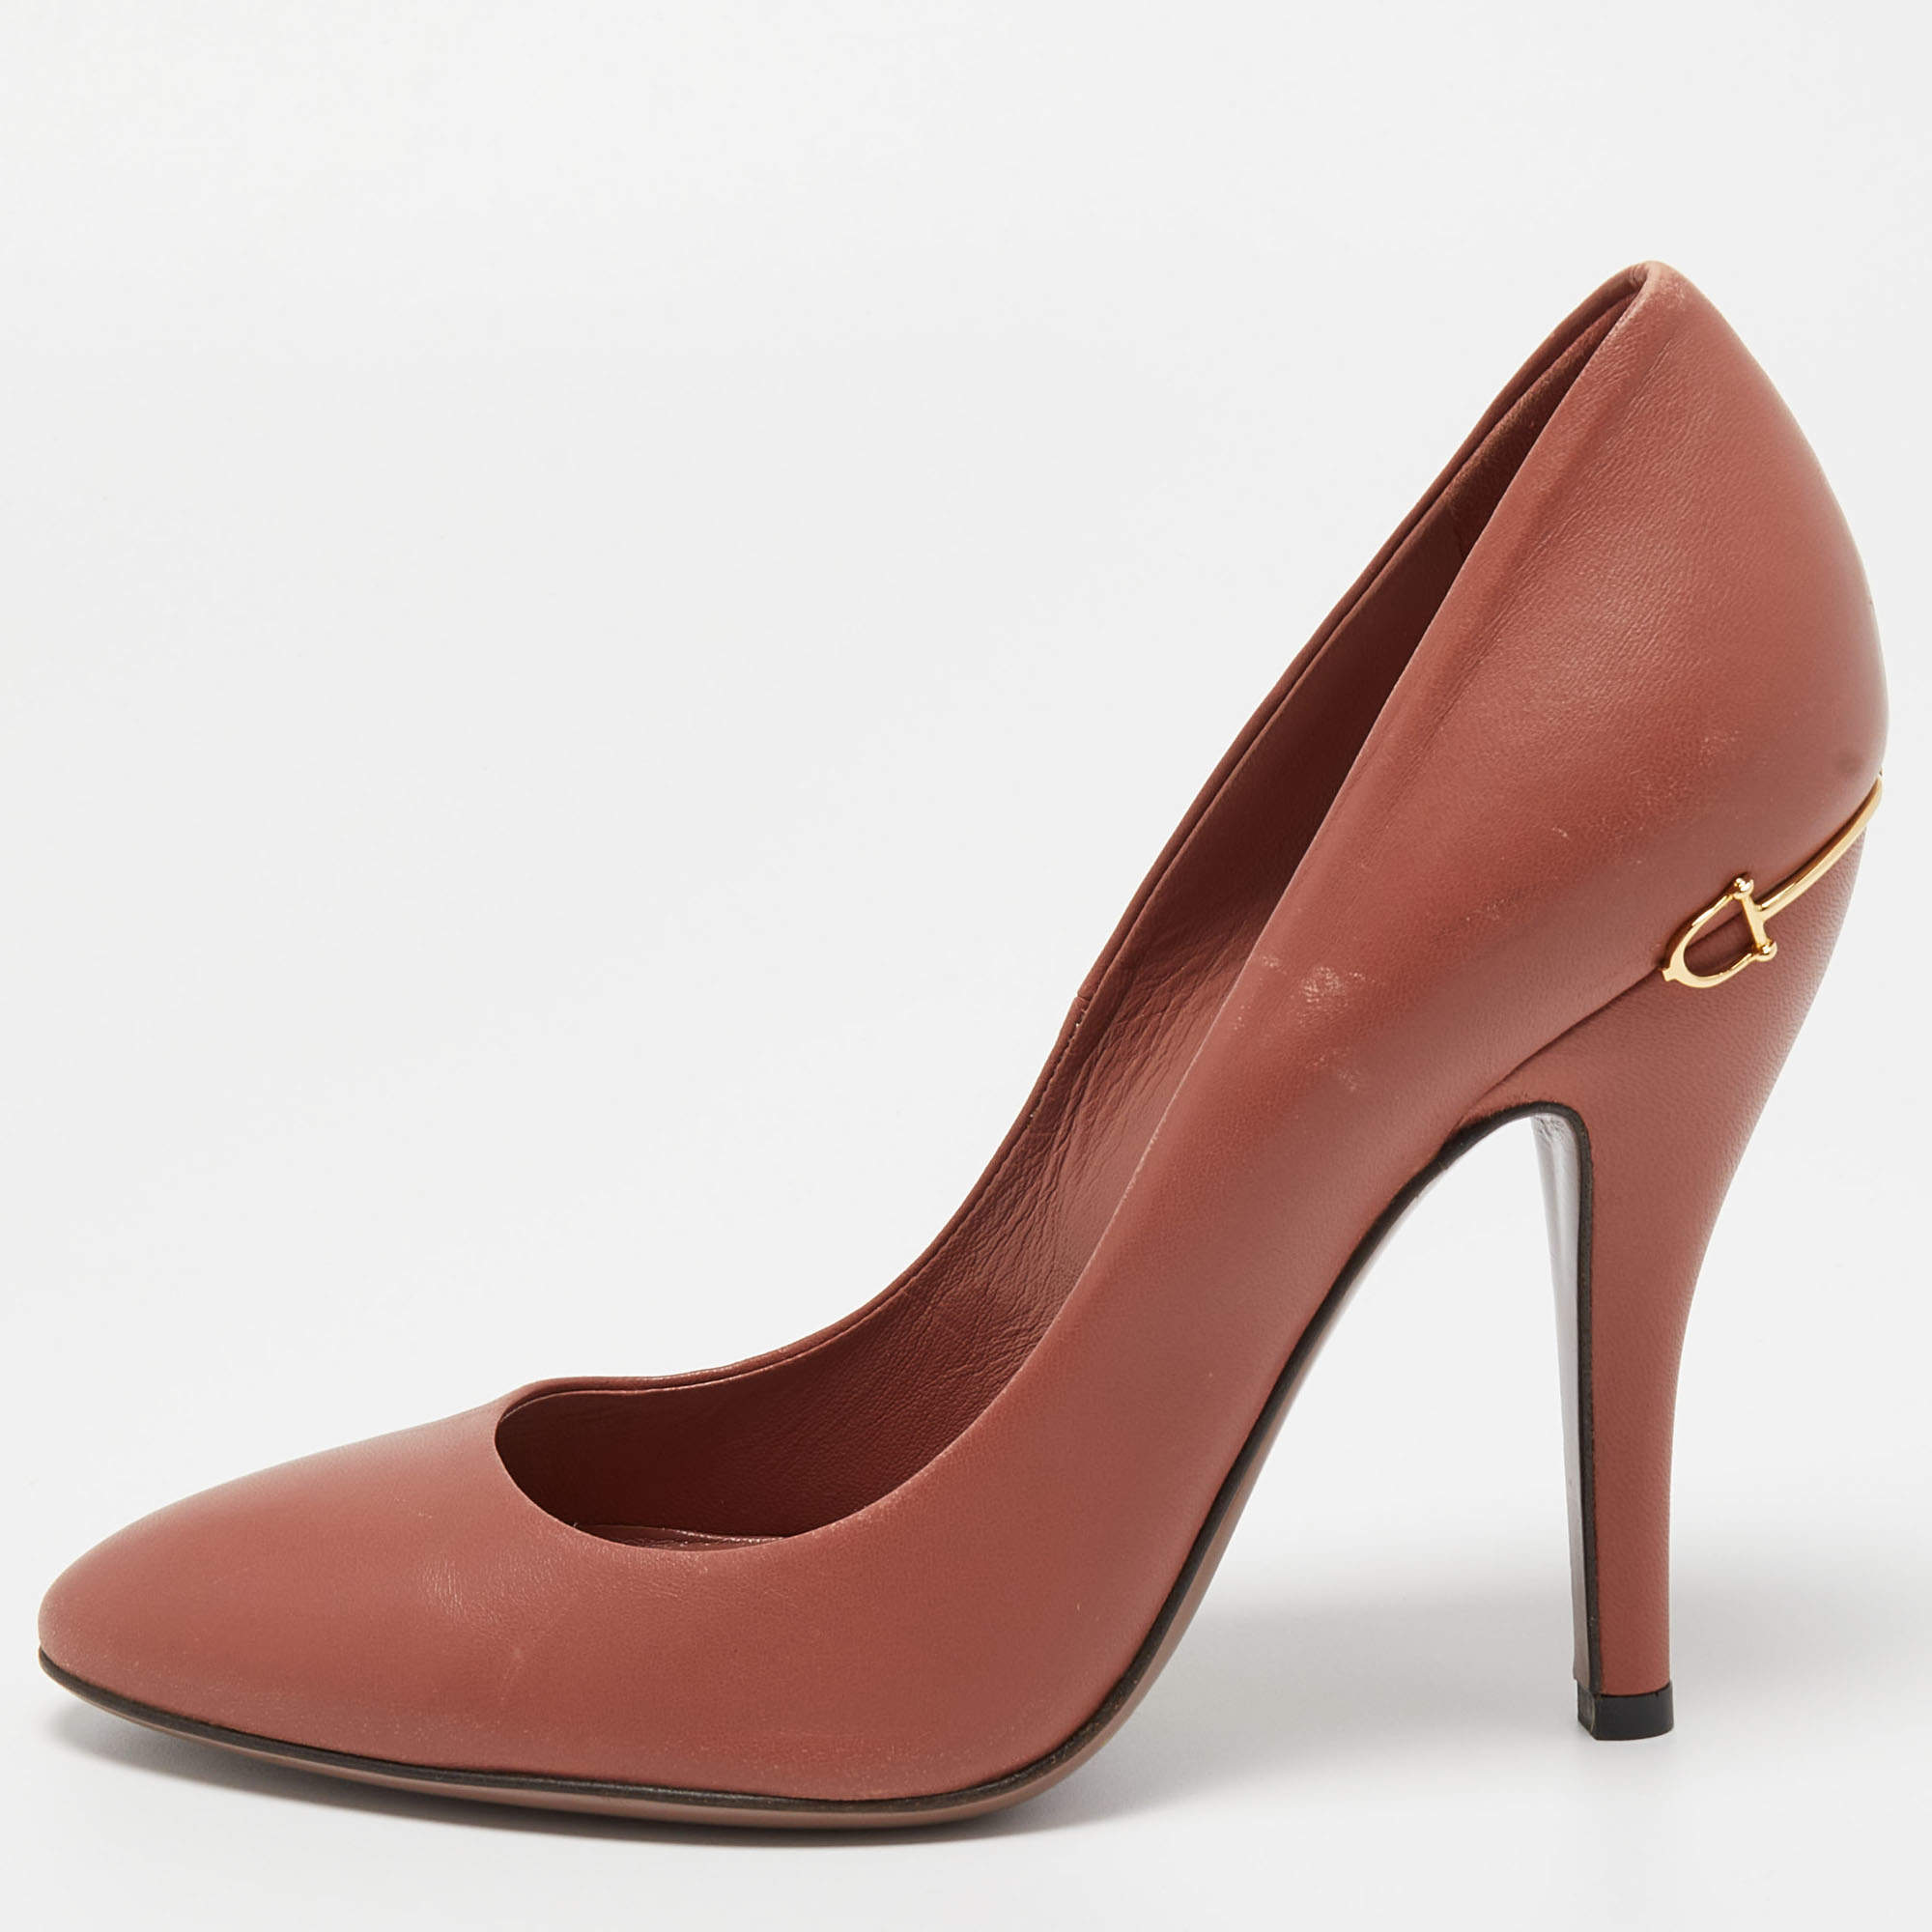 Nine West | Shoes | Nine West Gabrielle Platform Slingback Patent Pump Heels  75 | Poshmark